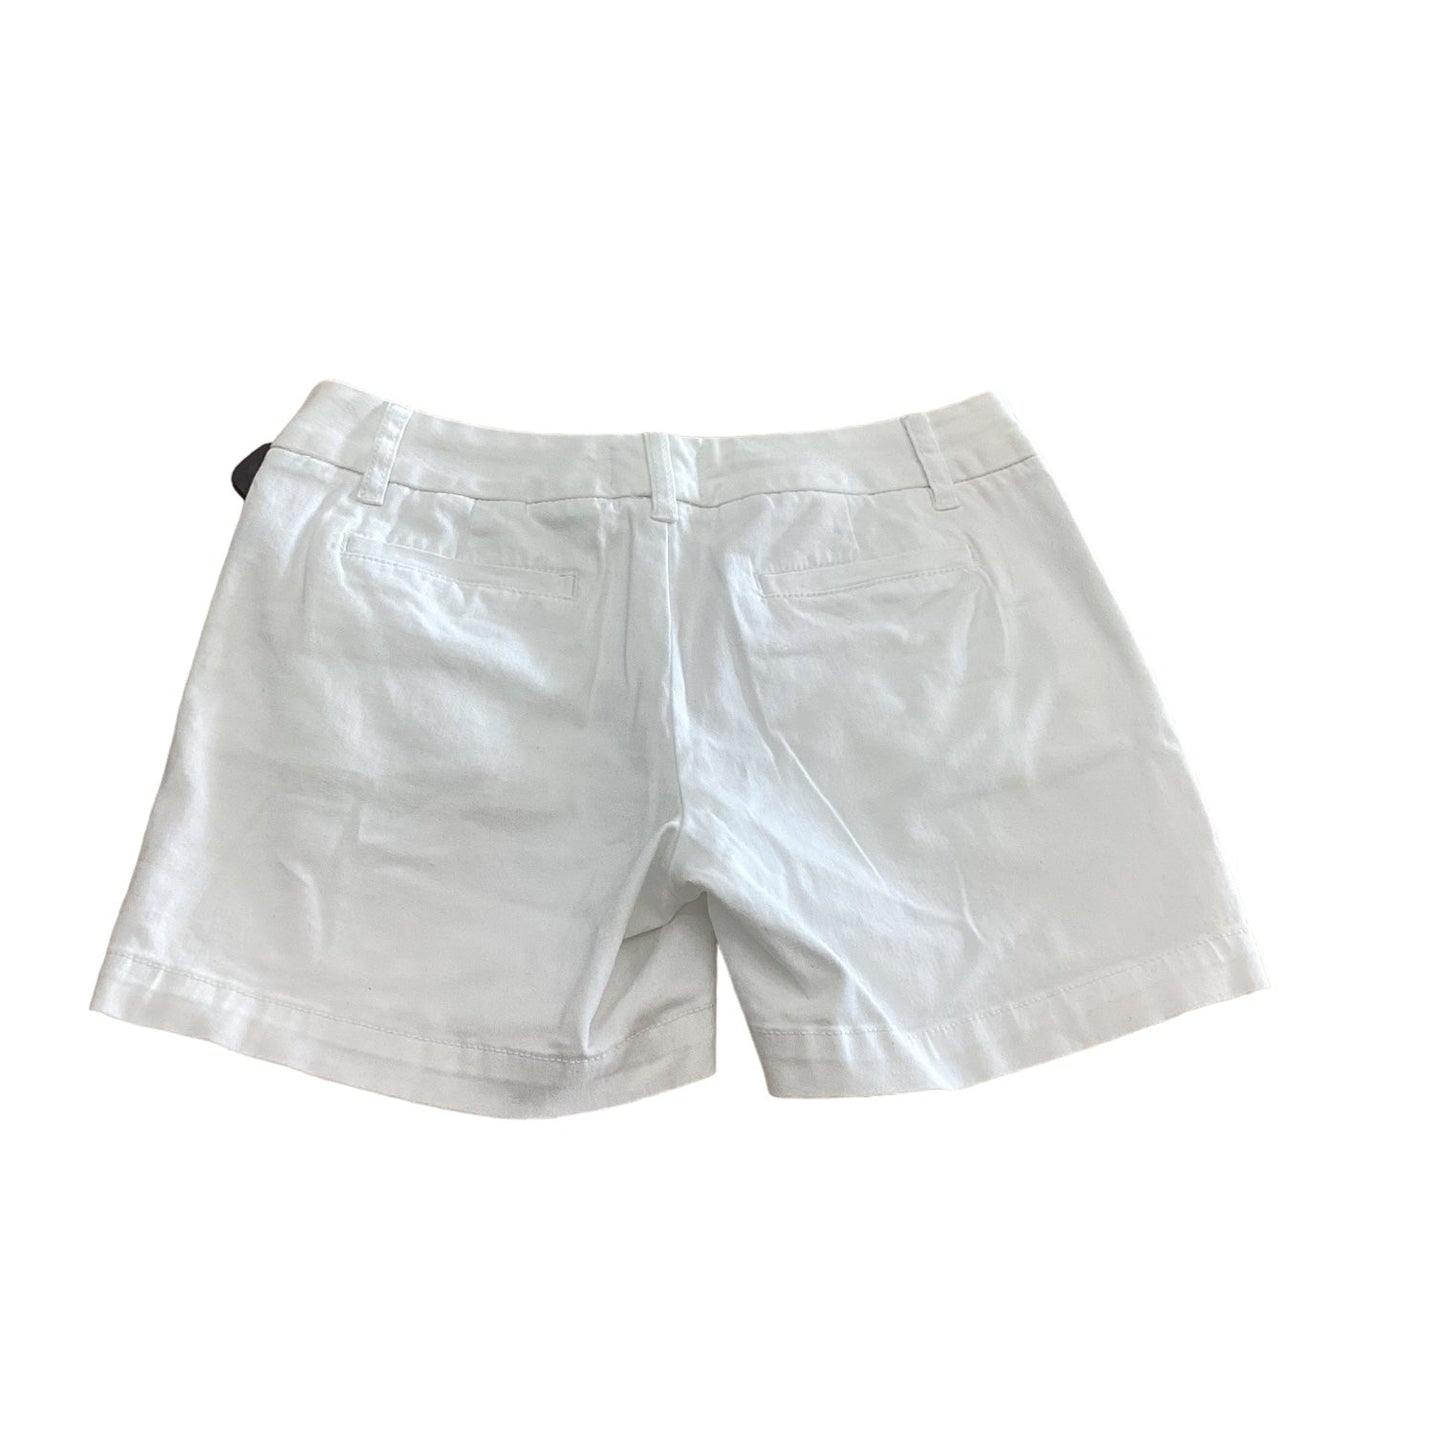 White Shorts Caslon, Size 4